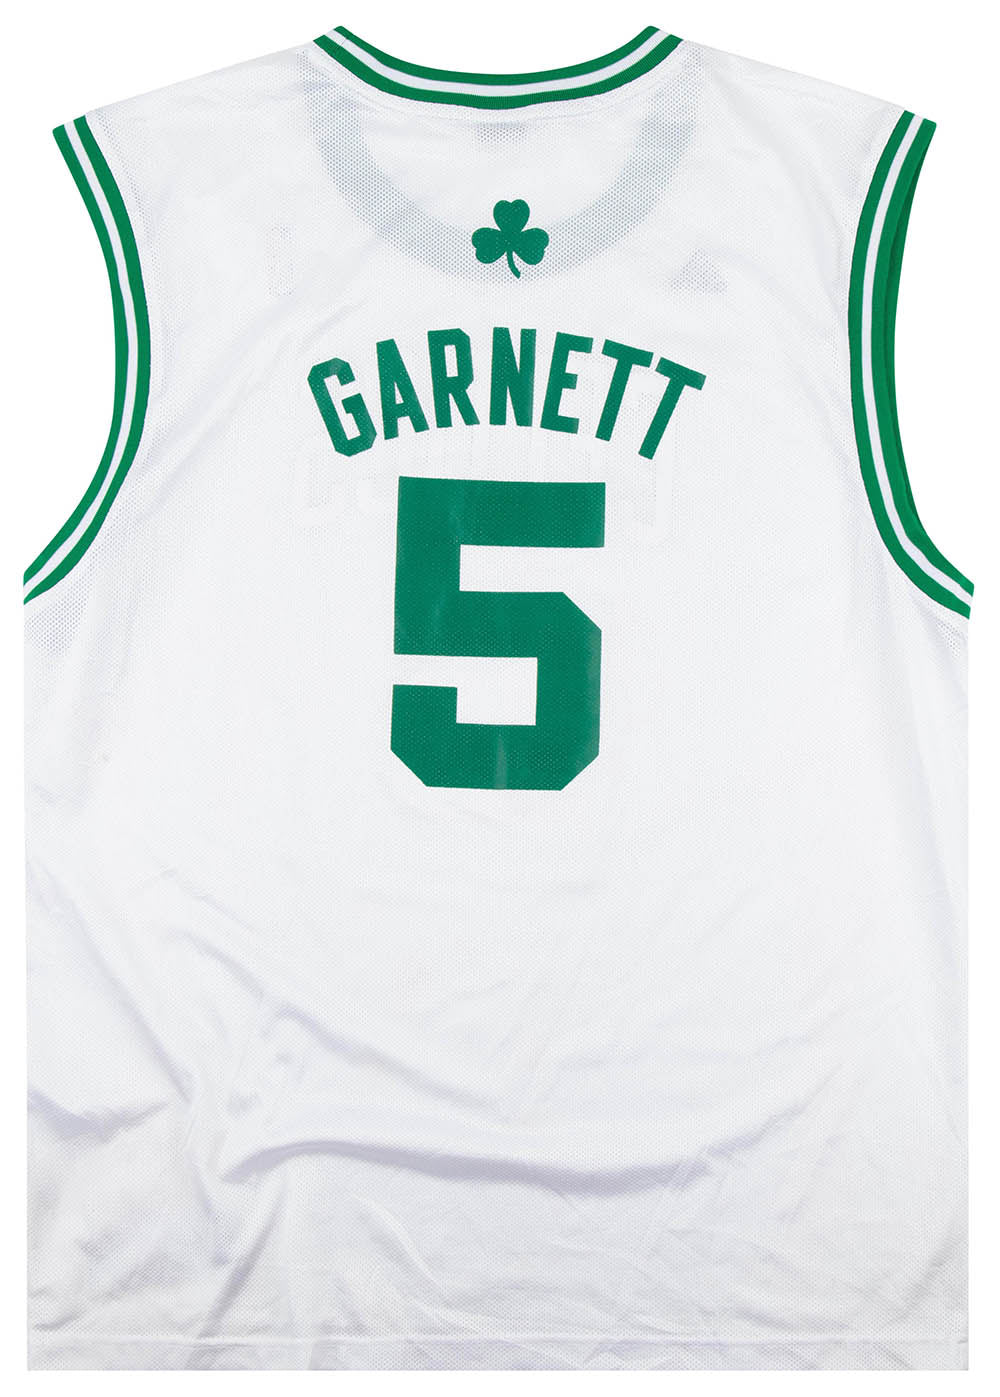 Kevin Garnett Throwback Timberwolves Jersey  Vintage Celtics Gear -  Classic American Sports